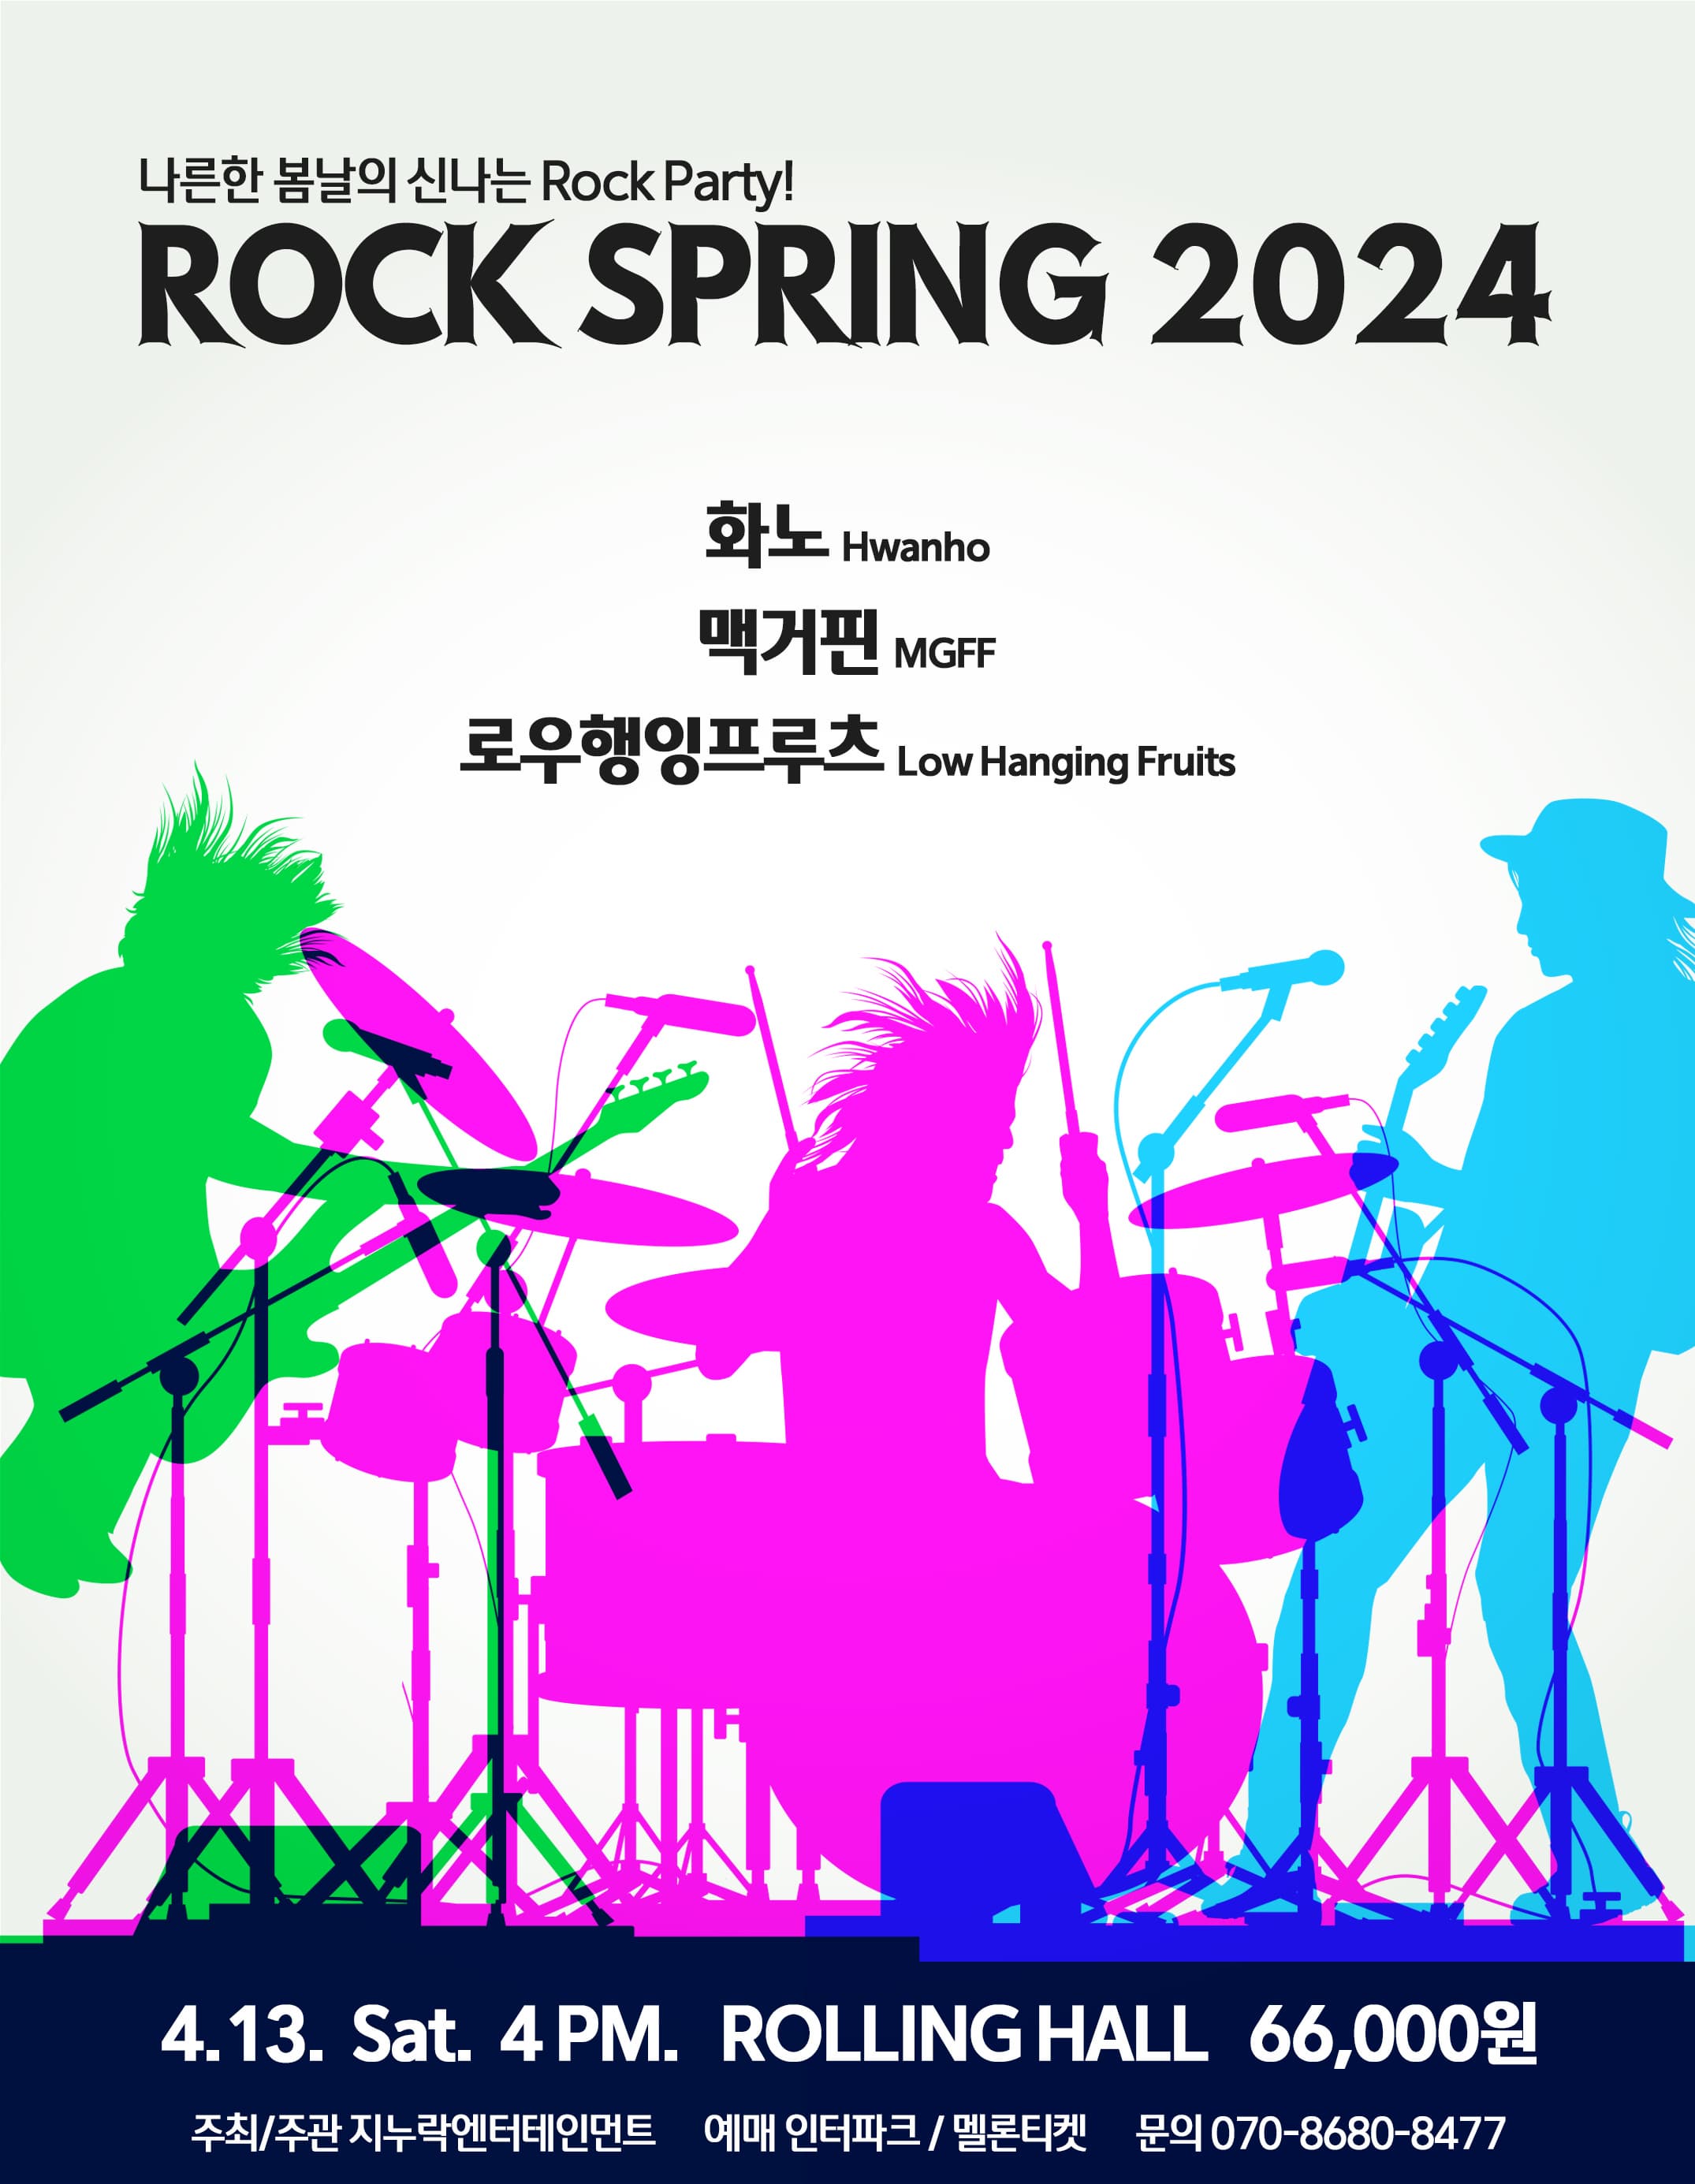 ROCK SPRING 2024 - 나른한 봄날의 신나는 Rock Party